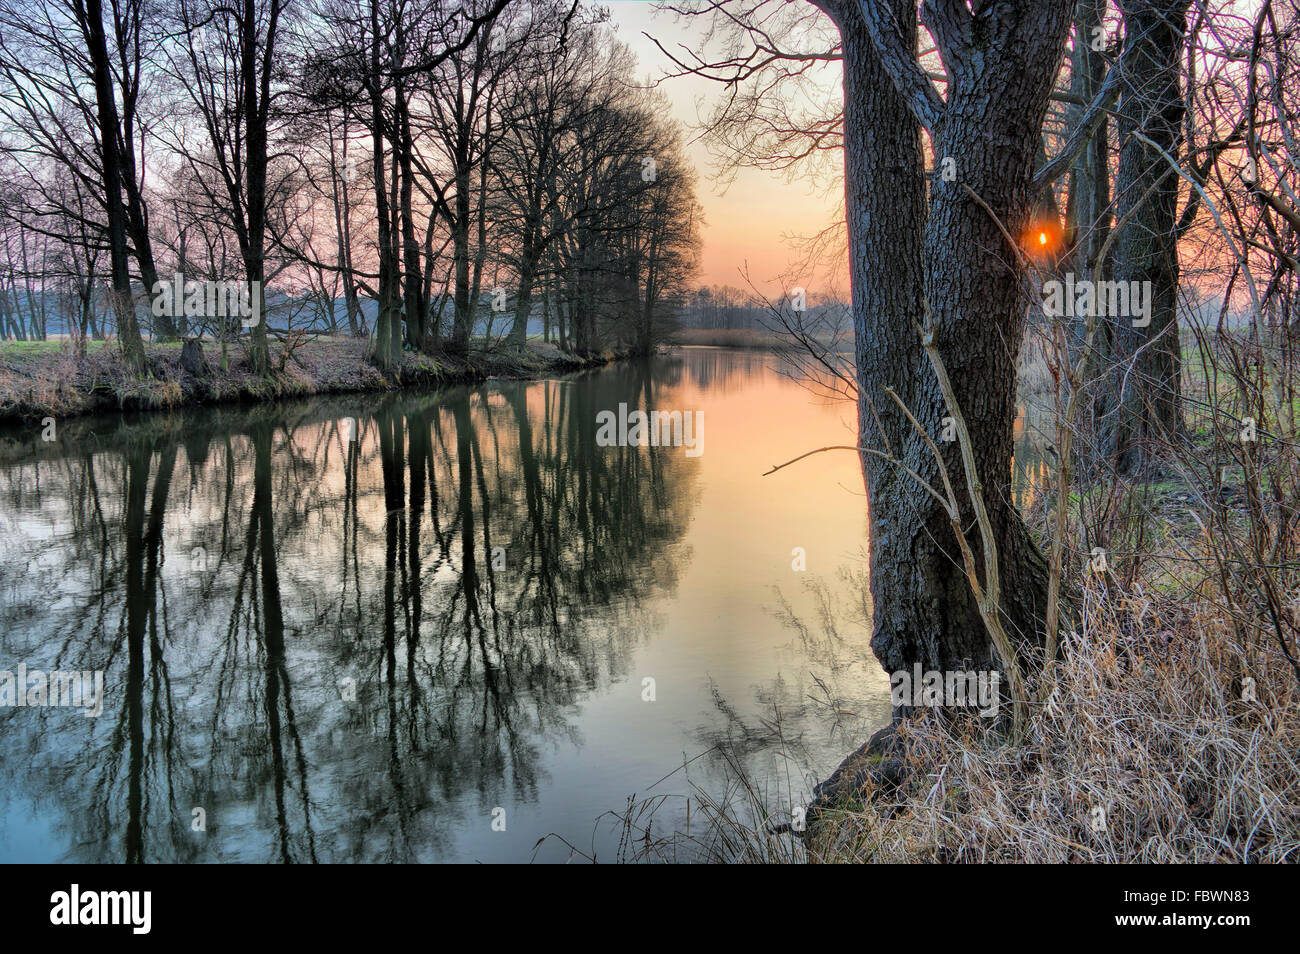 Spree im Winter Sonnenuntergang - river Spree in winter 01 Stock Photo